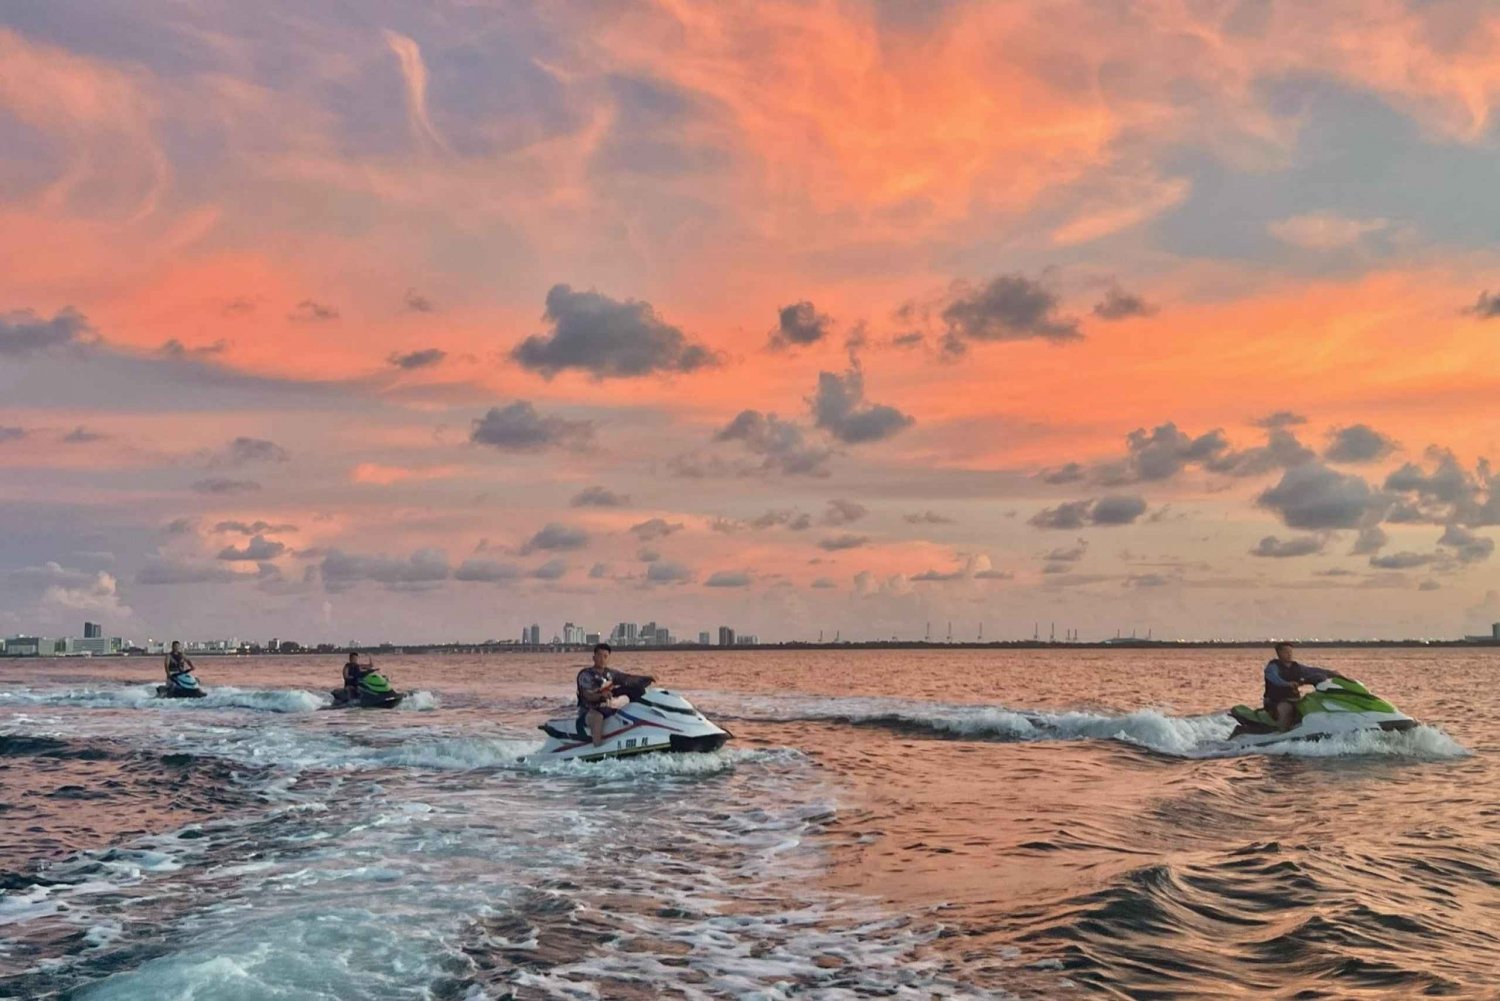 Miami Beach: Noleggio WaveRunner e giro in barca